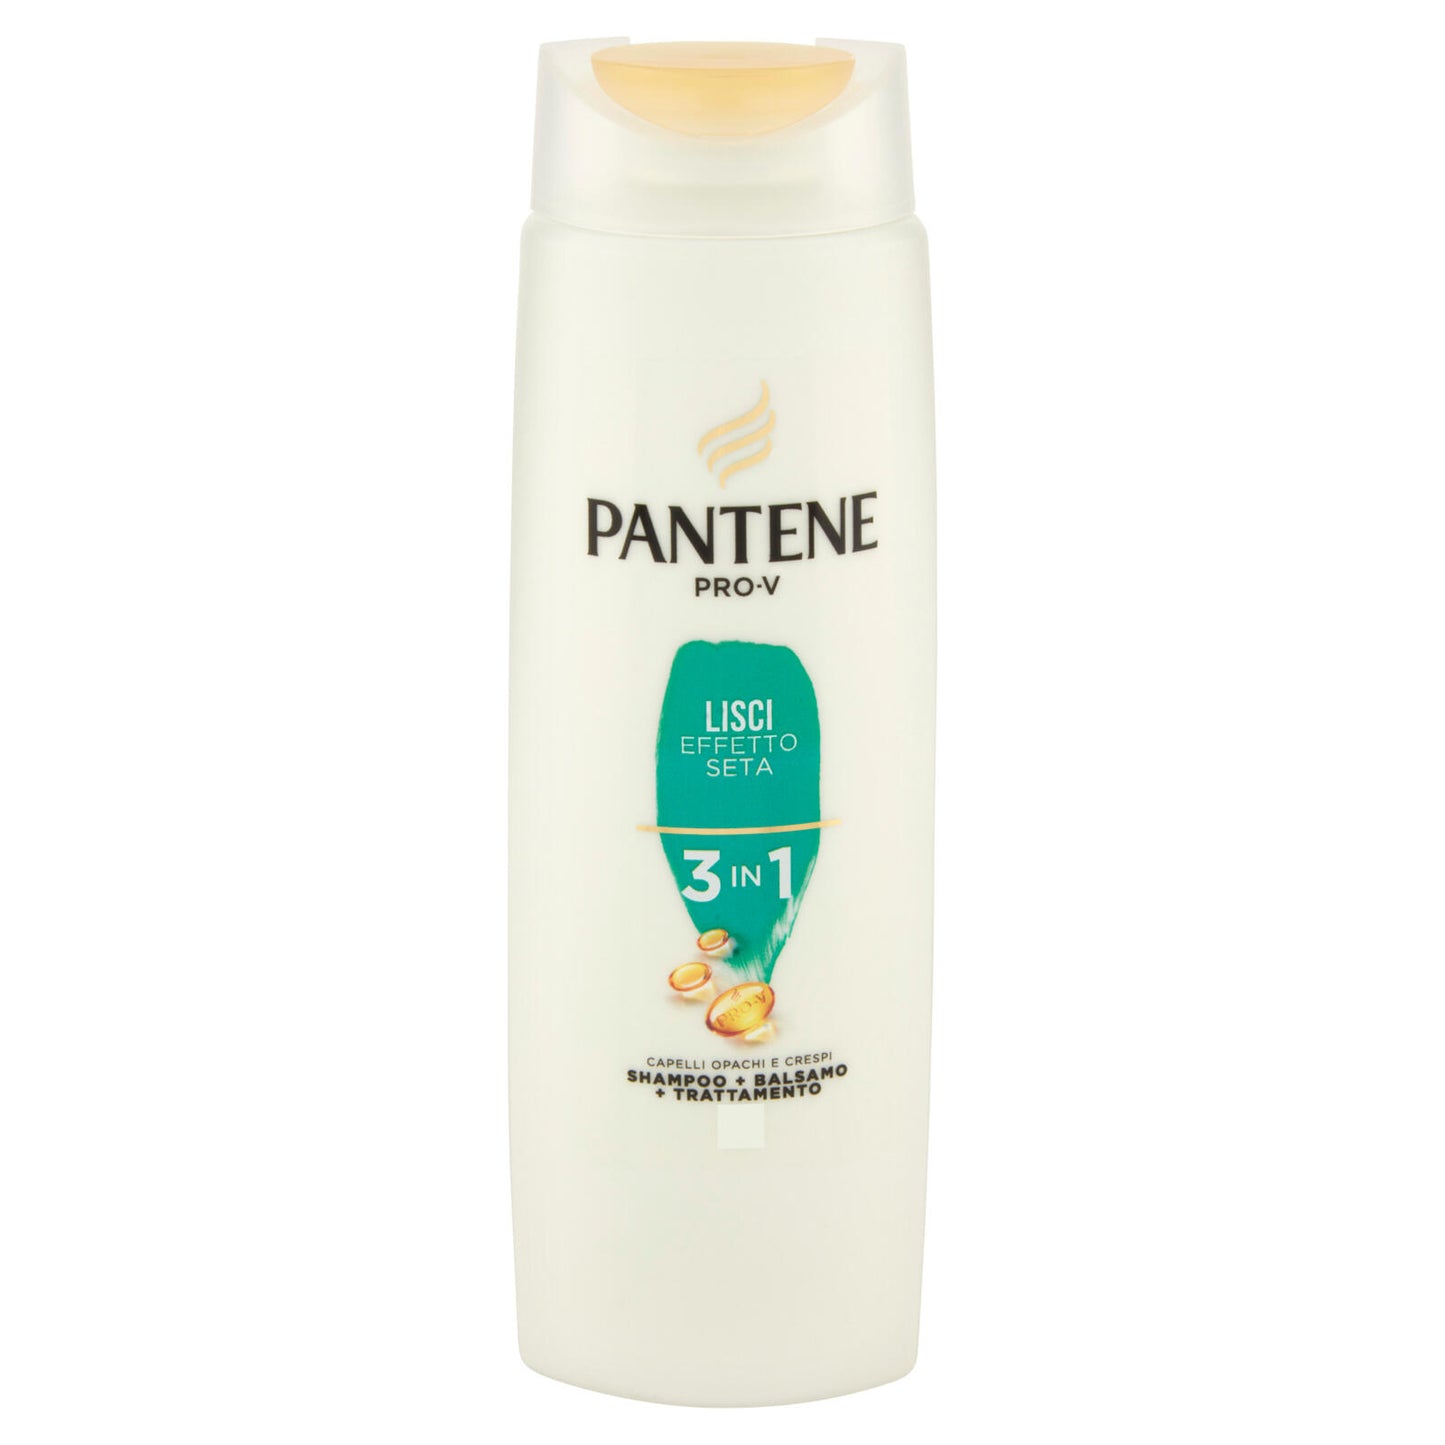 Pantene Shampoo+Balsamo+Trattamento 3in1 Lisci Effetto Seta 225 ml